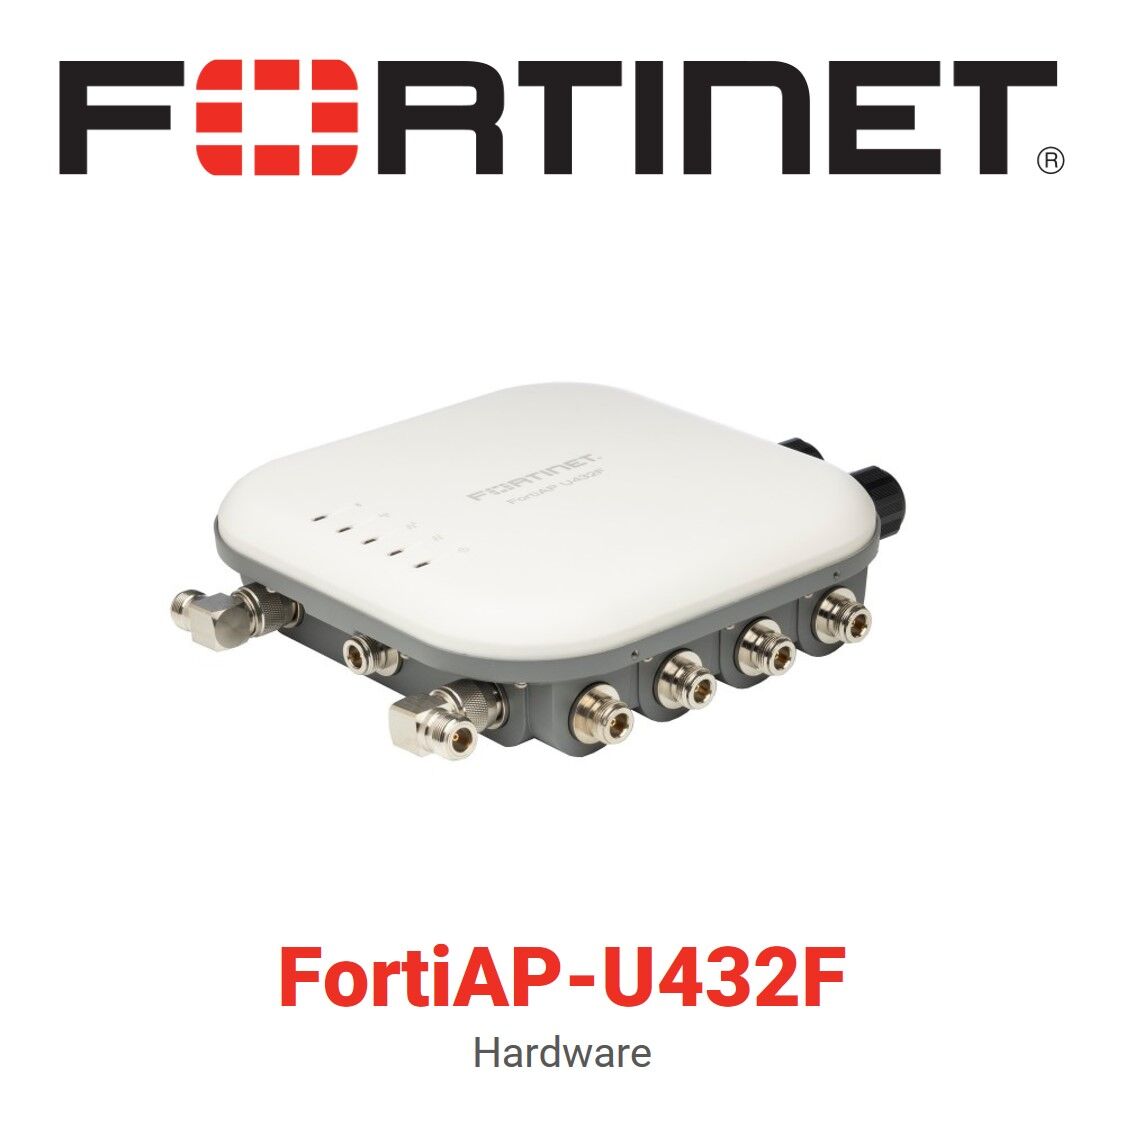 Fortinet FortiAP-U432F